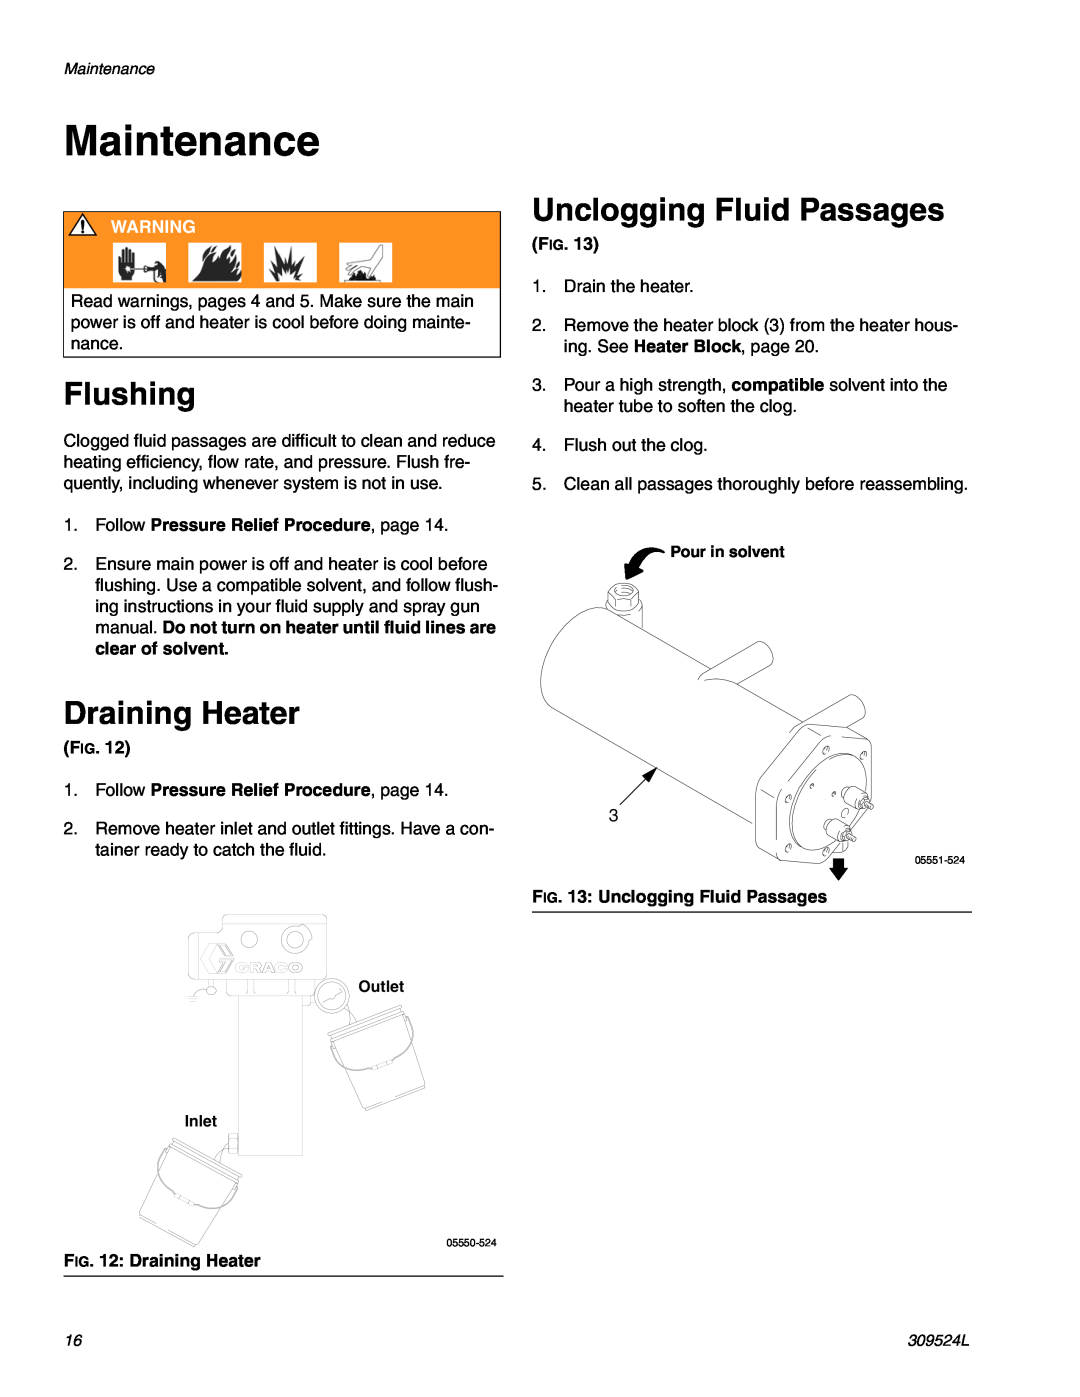 Graco 309524L Maintenance, Flushing, Unclogging Fluid Passages, Draining Heater, Follow Pressure Relief Procedure, page 